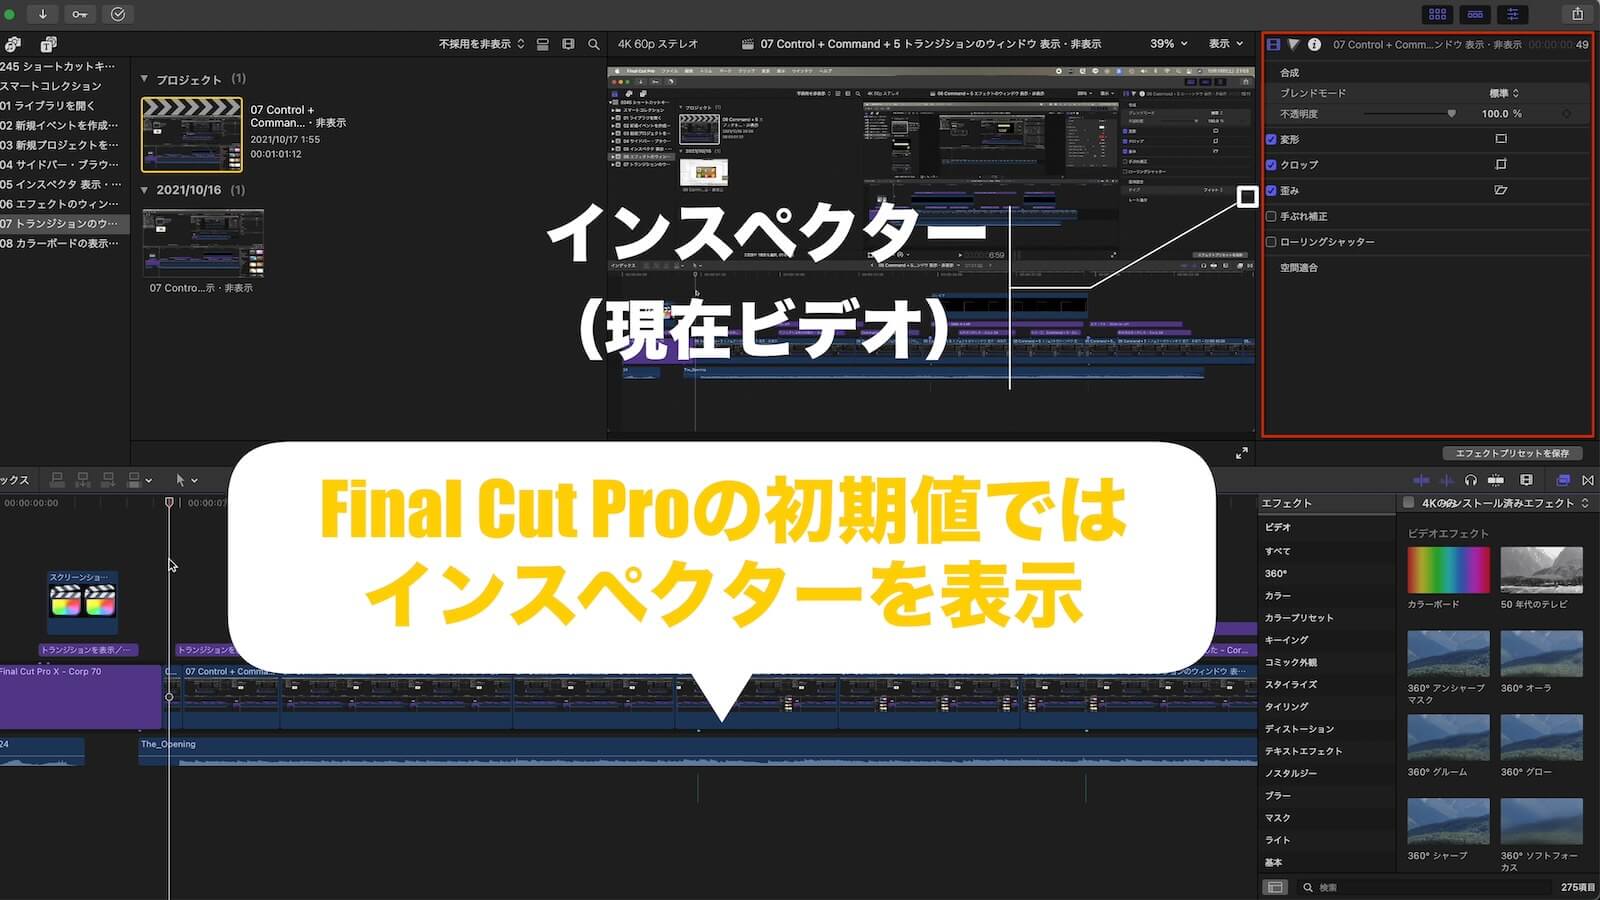 Final Cut Pro Inspector Display Screen